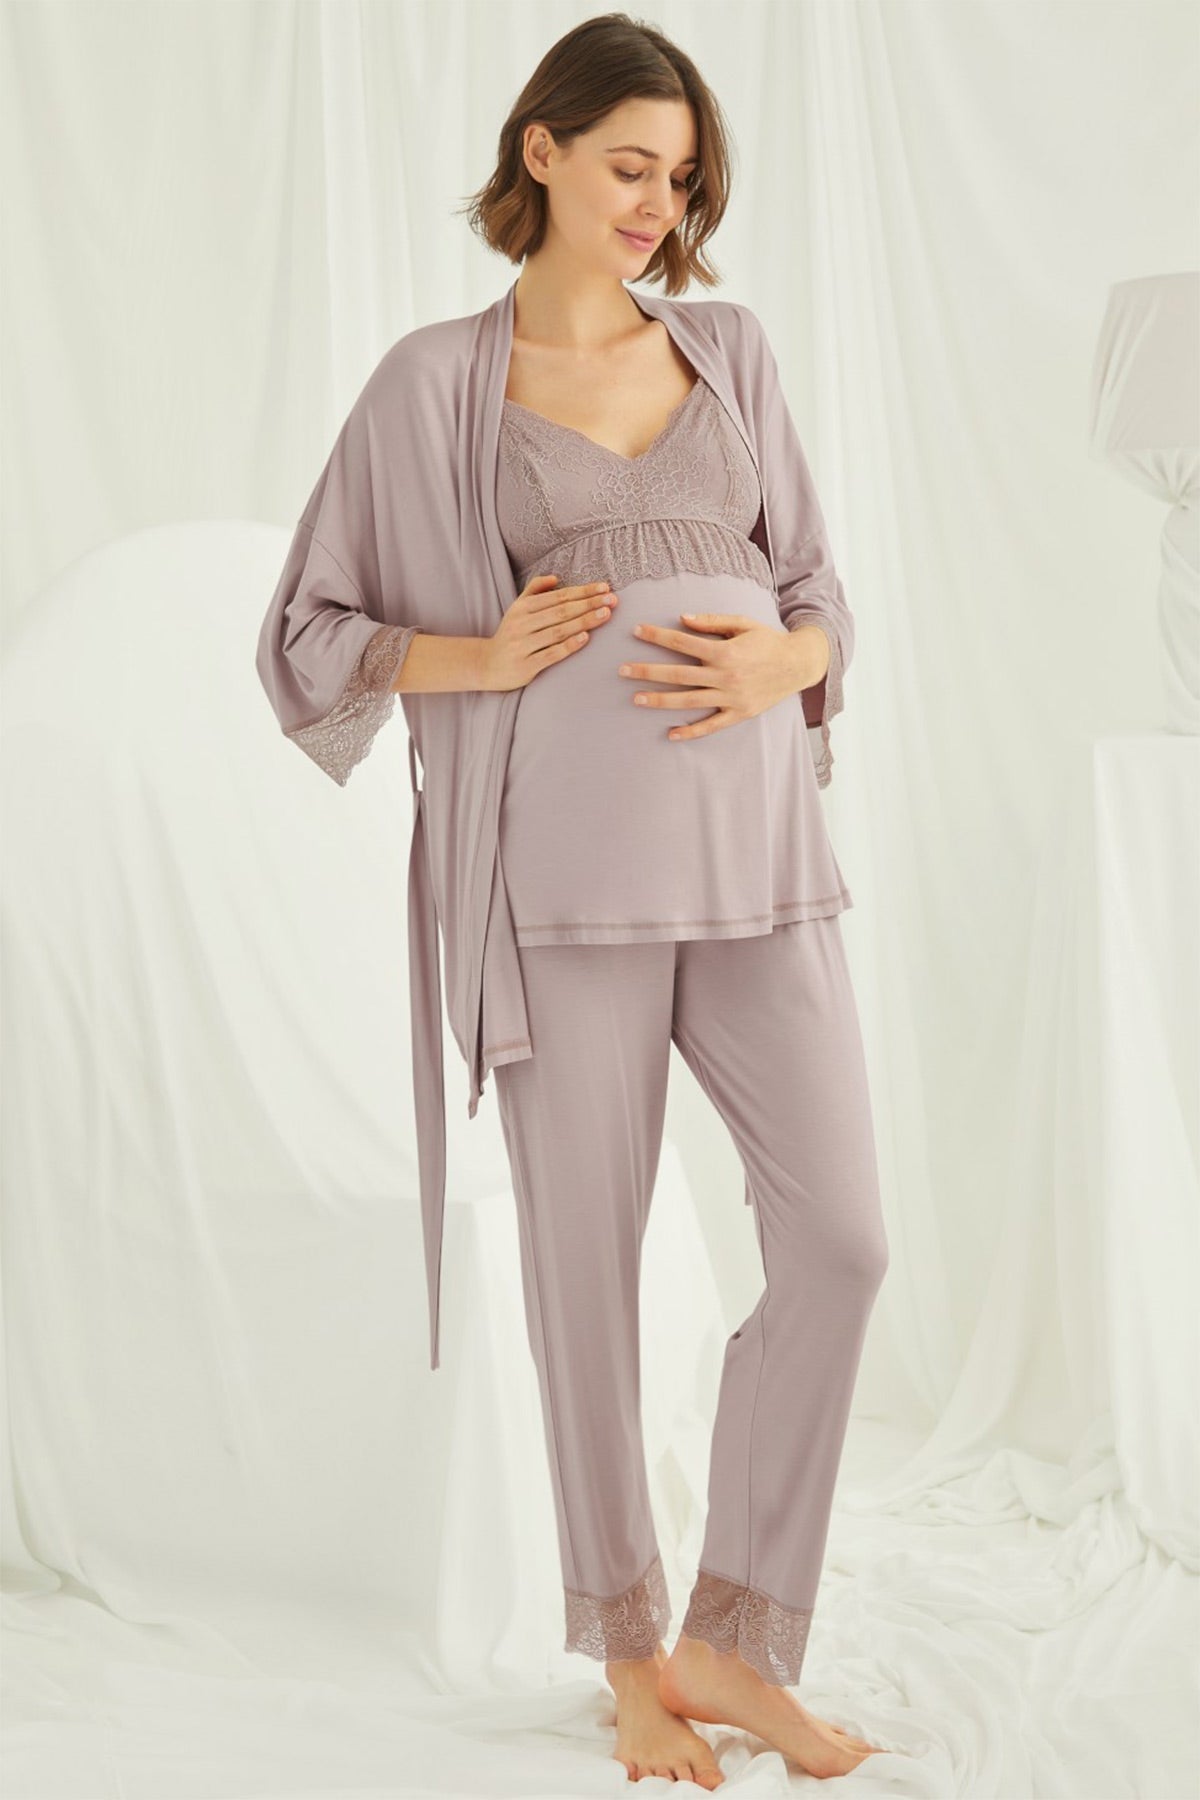 Shopymommy 24165 Velvet Lace Maternity & Nursing Nightgown Black